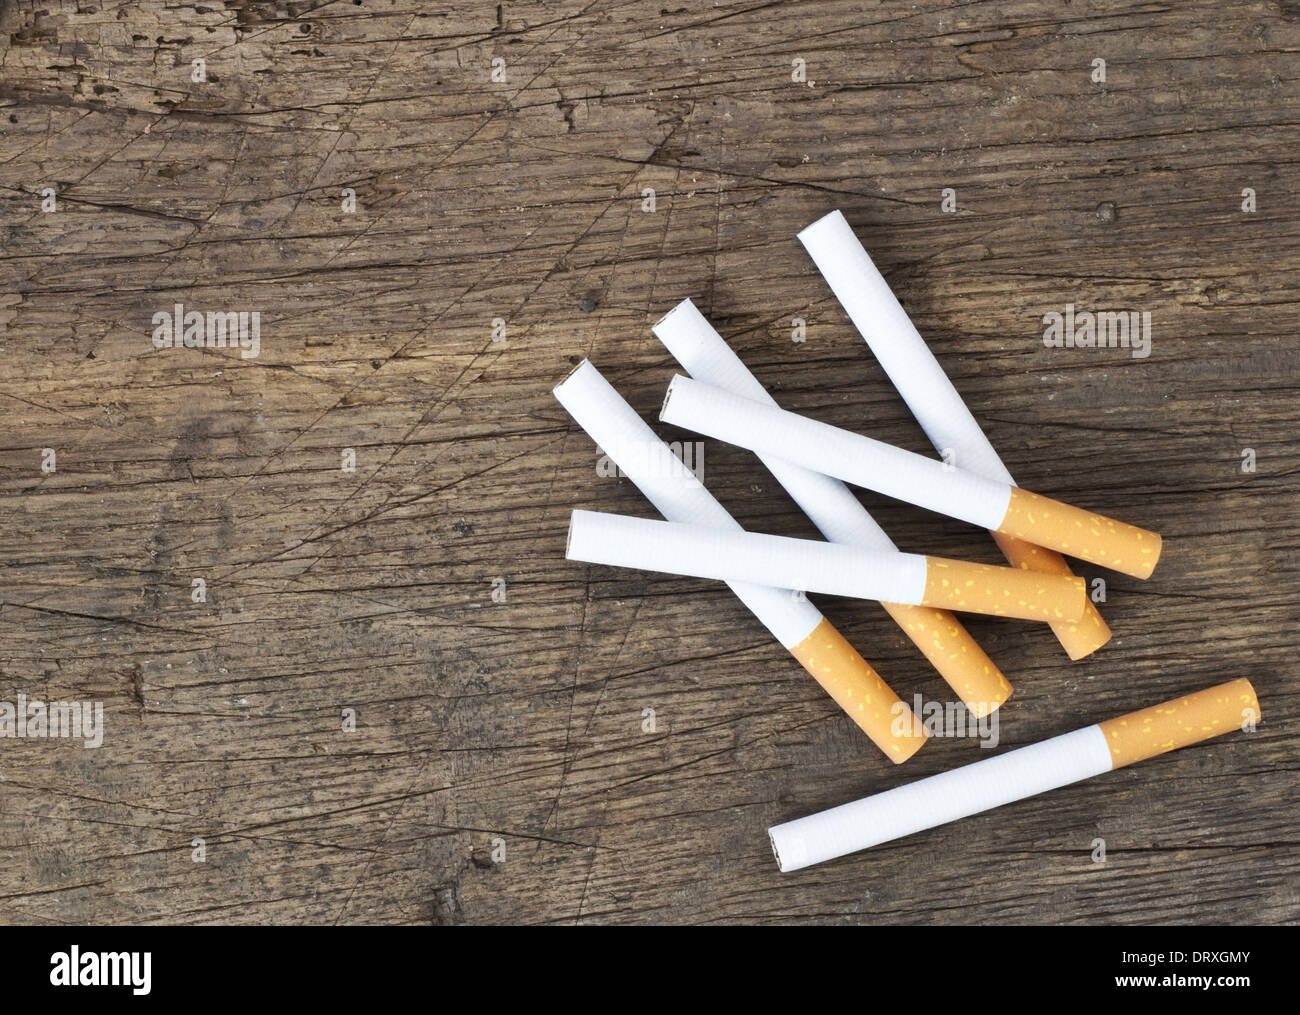 Zigaretten auf Holzbrett liegen. Stockfoto